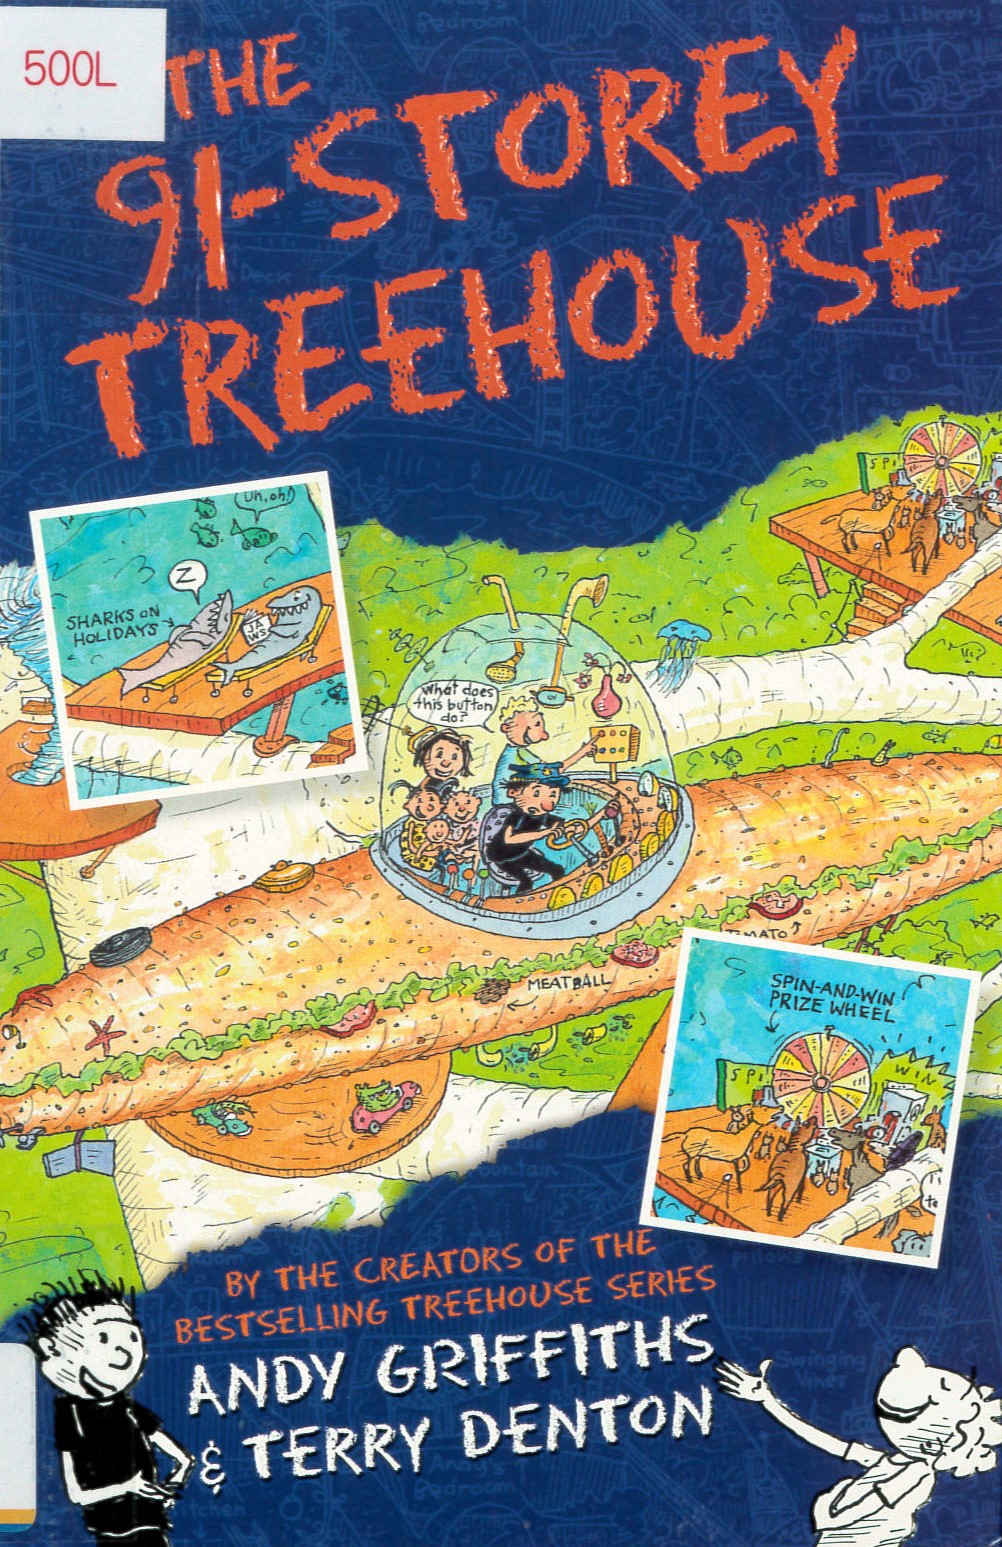 The 91-storey treehouse /